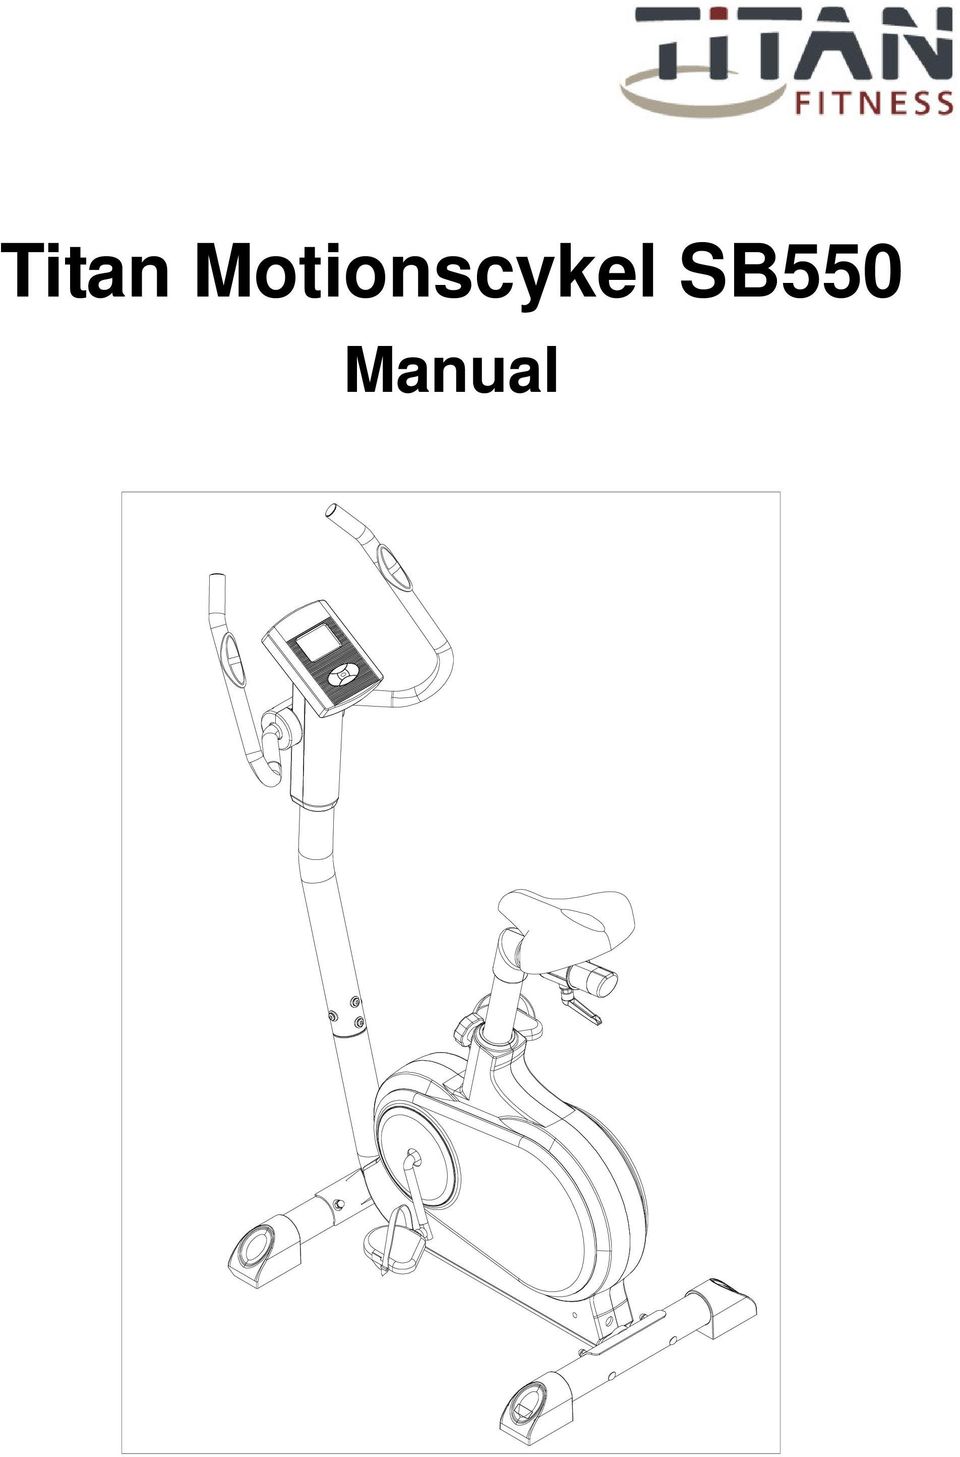 Titan Motionscykel SB550. Manual - PDF Free Download